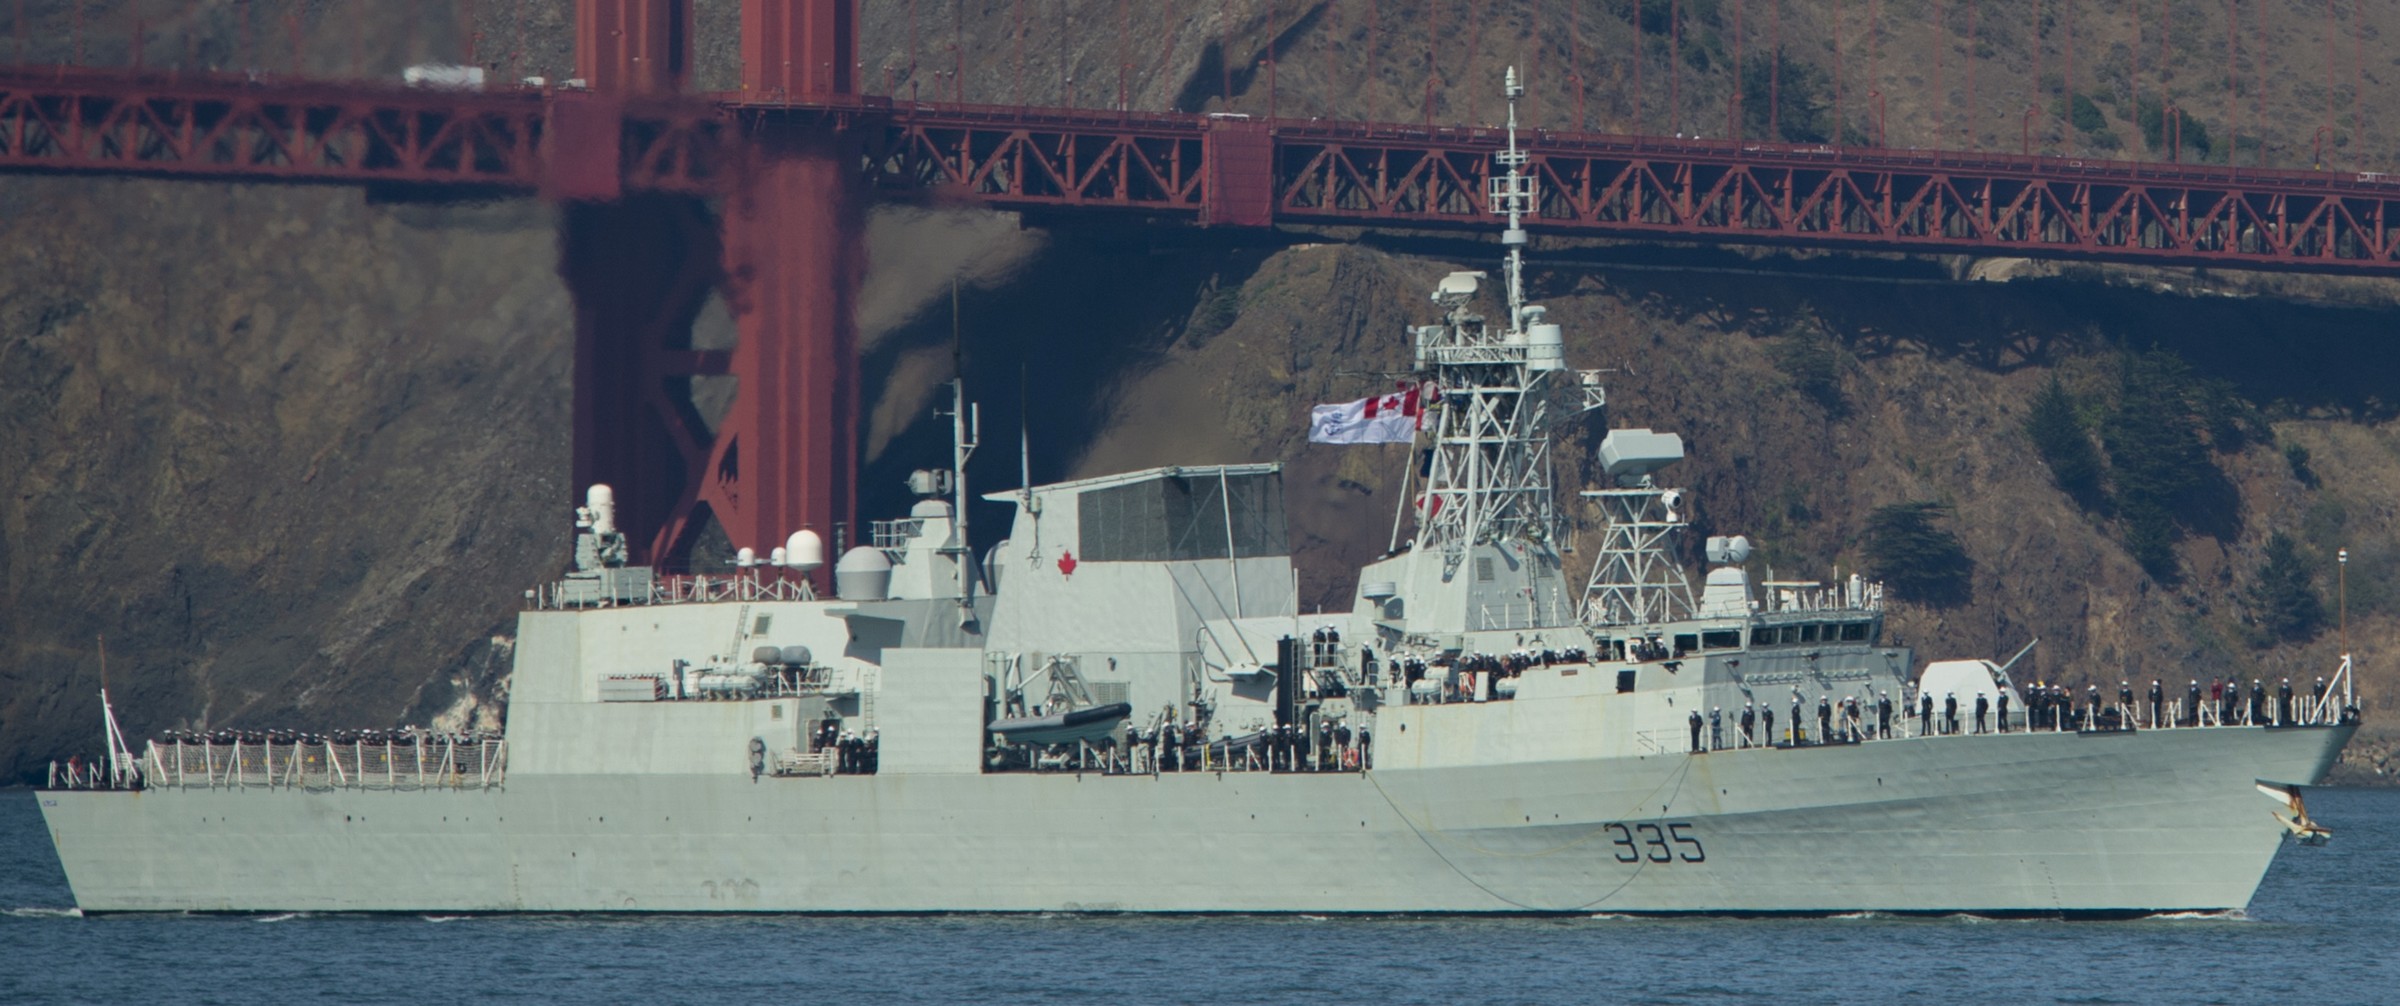 ffh-335 hmcs calgary halifax class helicopter patrol frigate ncsm royal canadian navy 27